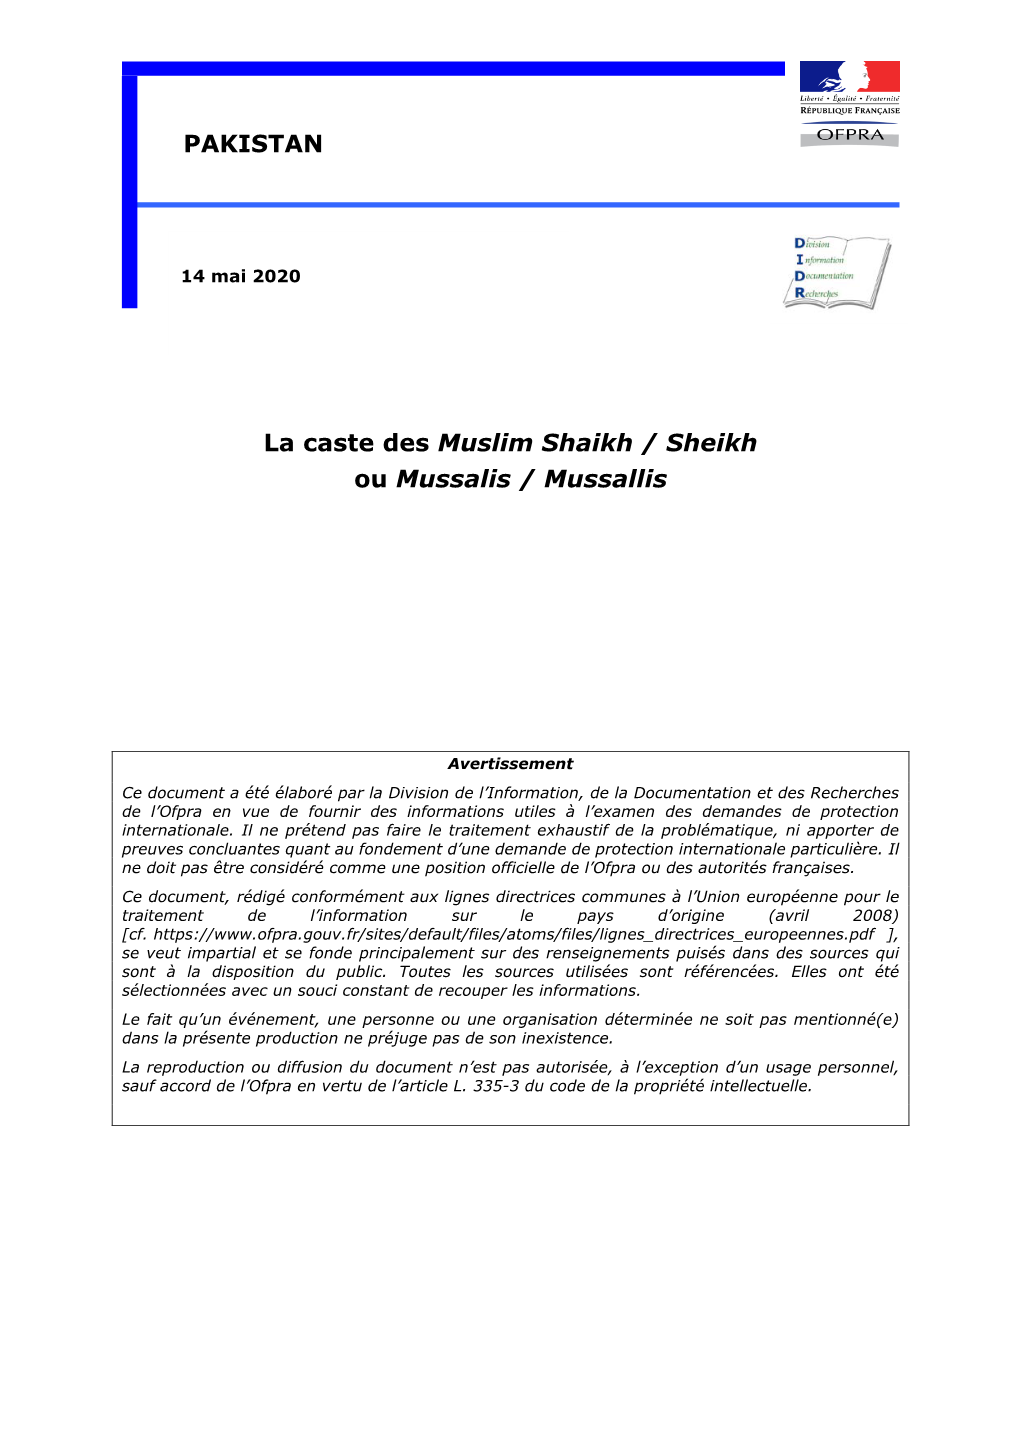 La Caste Des Muslim Shaikh / Sheikh Ou Mussalis / Mussallis PAKISTAN